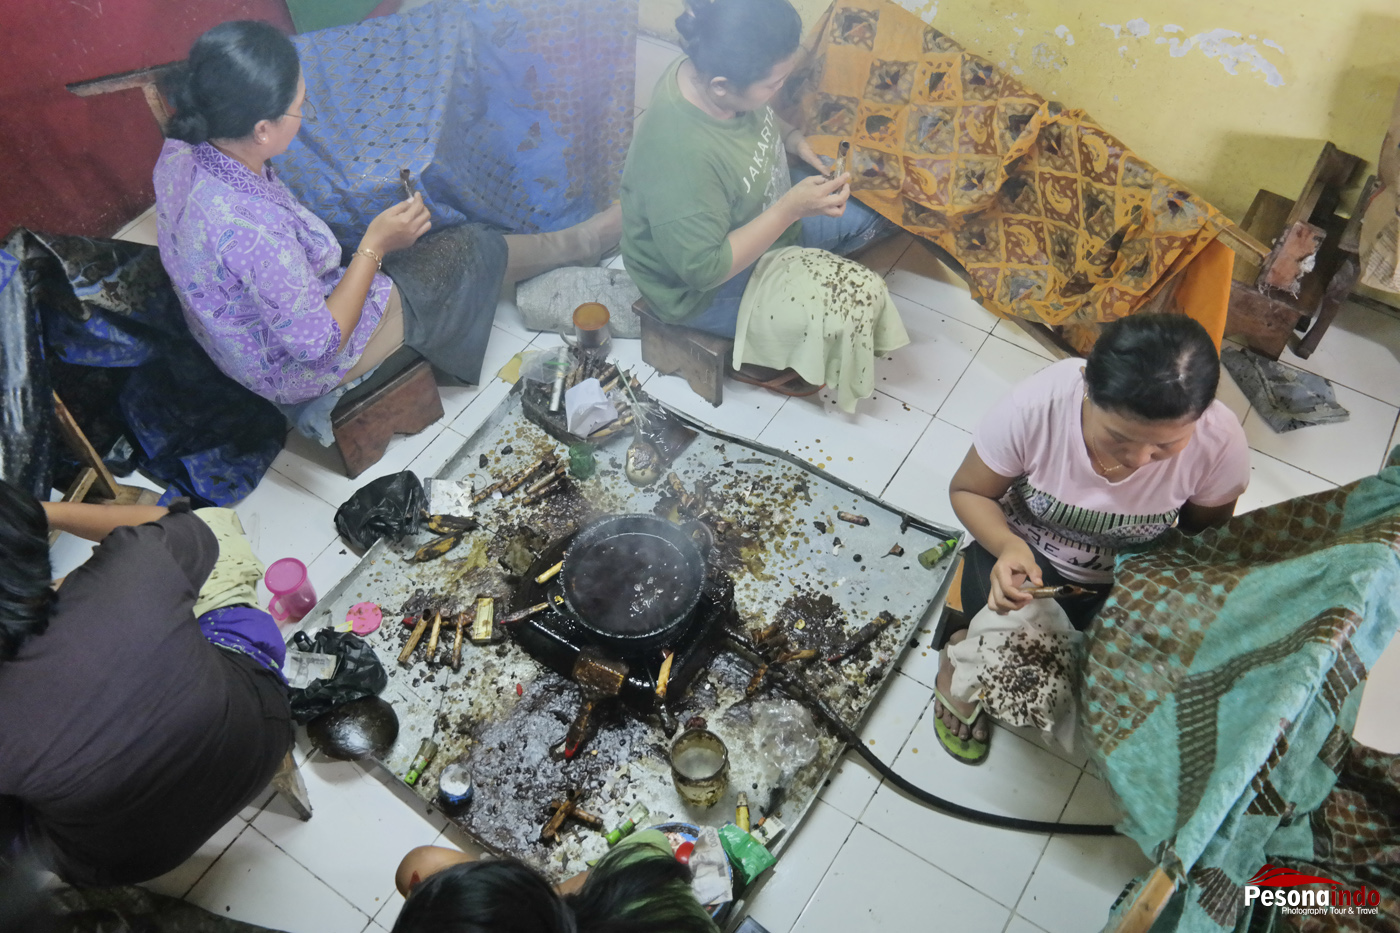 Pengrajin Batik Solo | Pesona Indonesia